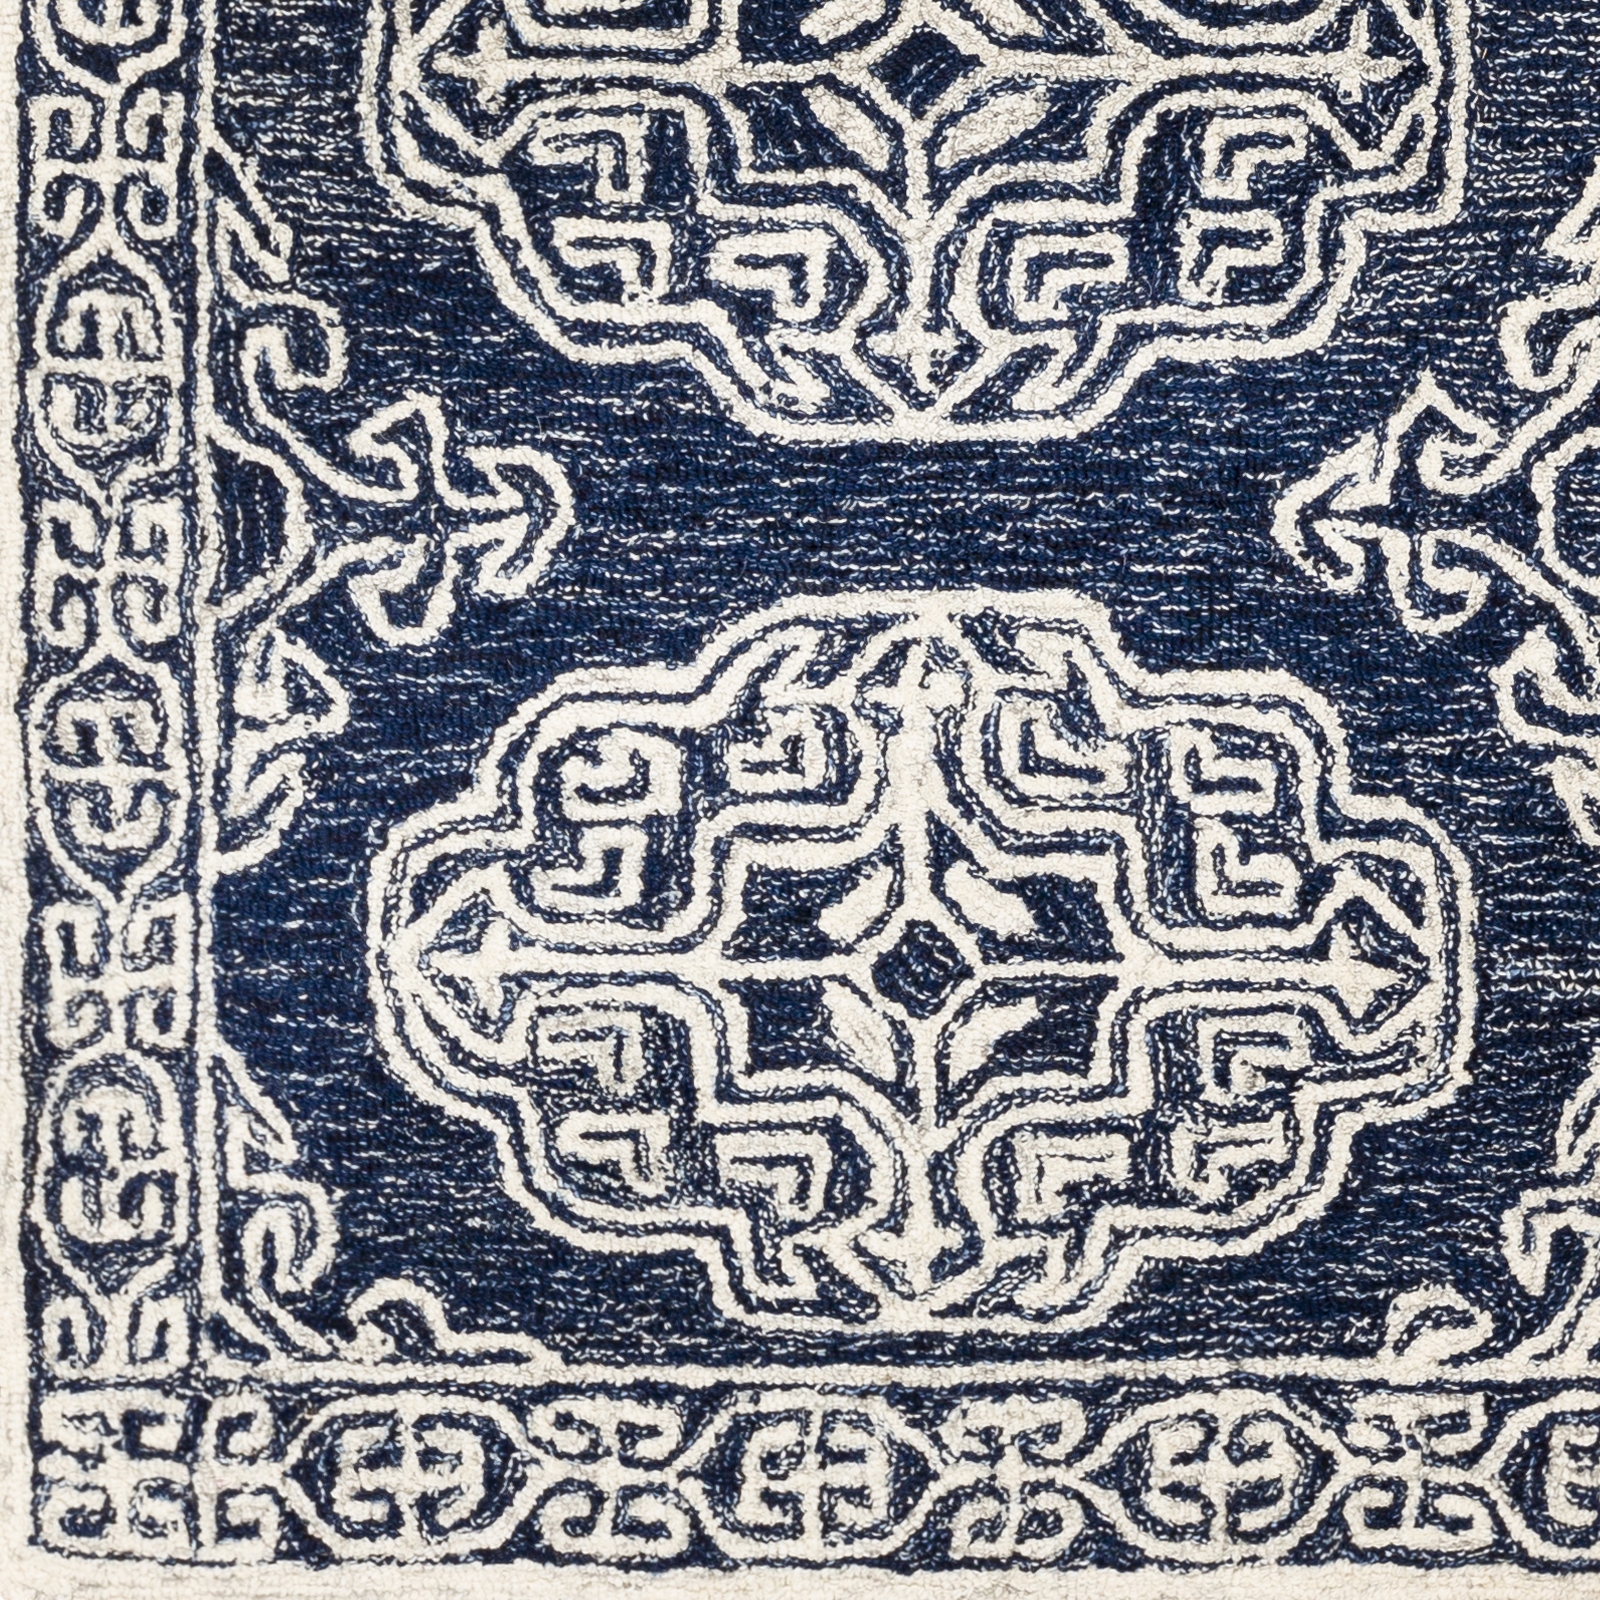 Granada Rug, 6' x 9' - Image 5